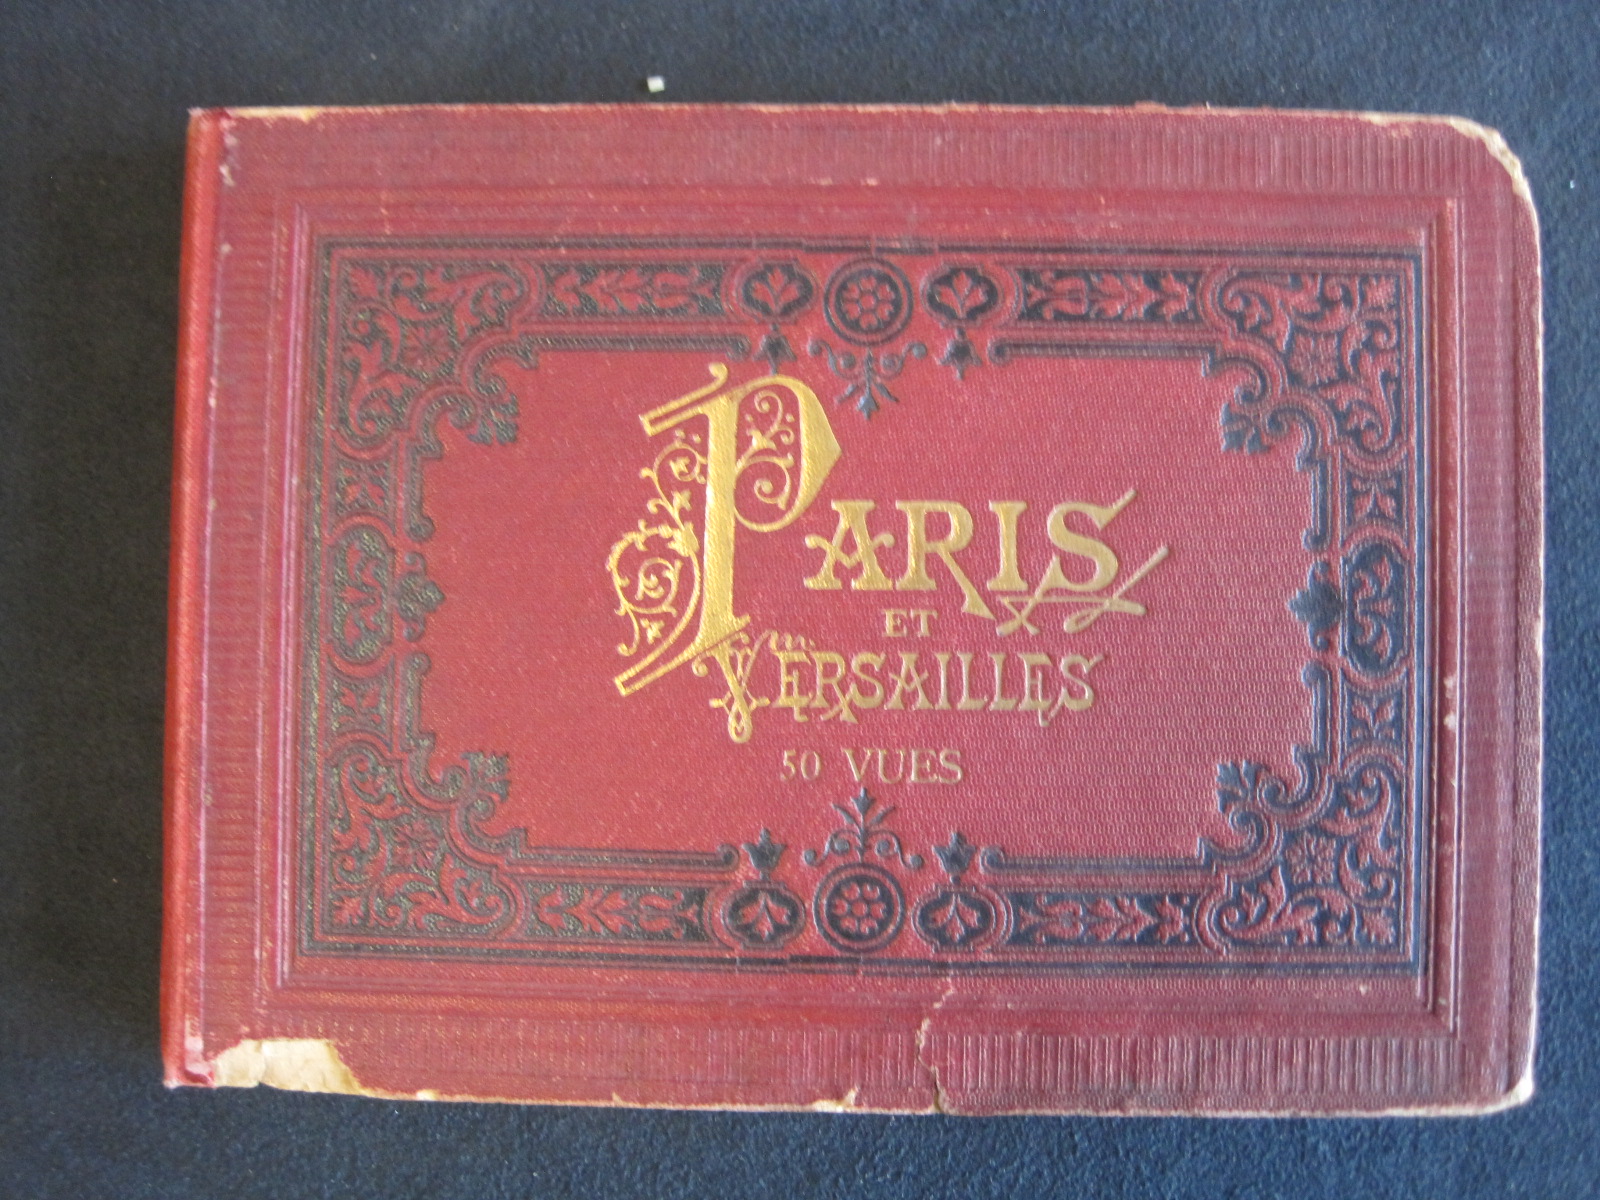 Paris et Versailles book image